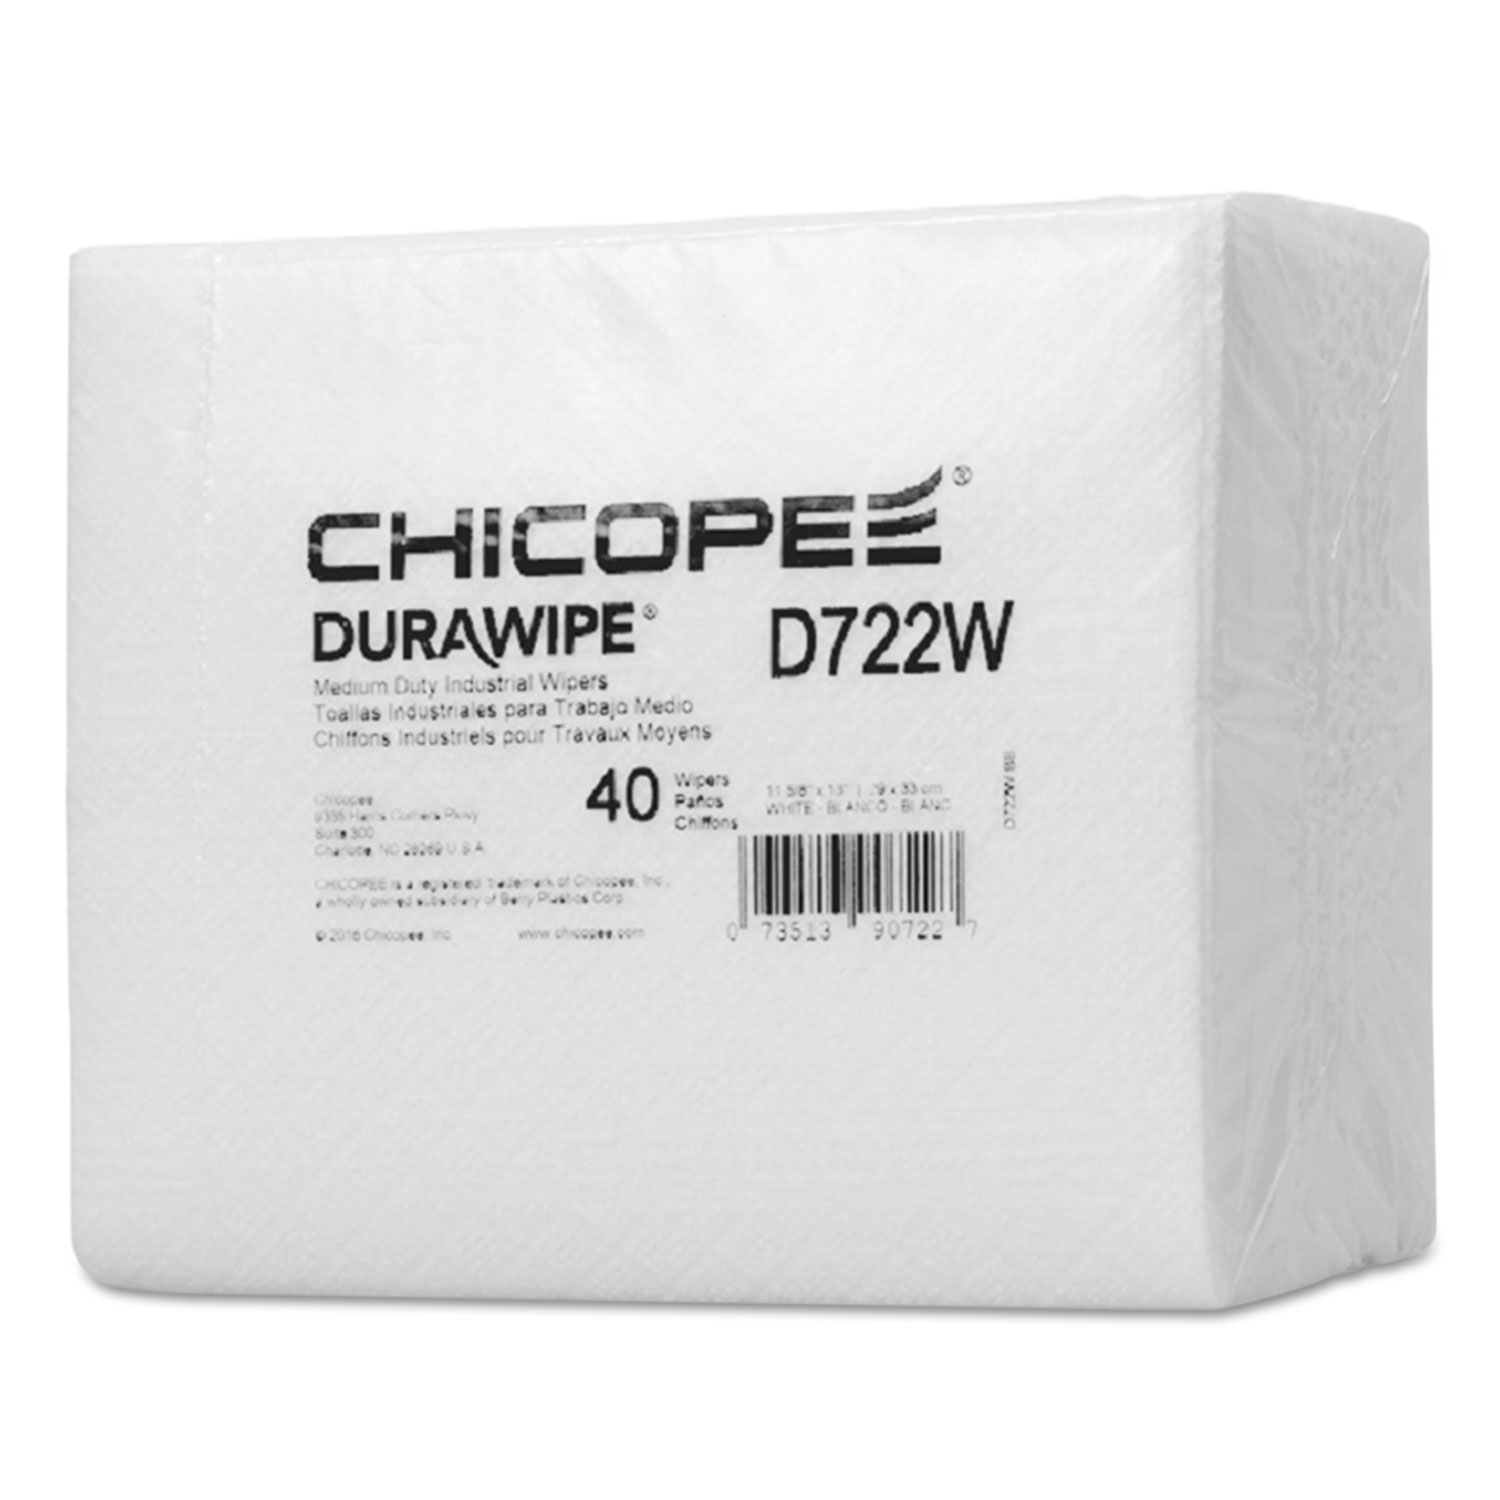  Chicopee D722W Durawipe Medium-Duty Industrial Wipers, 14.6 x 13.7, White, 960/Carton (CHID722W) 